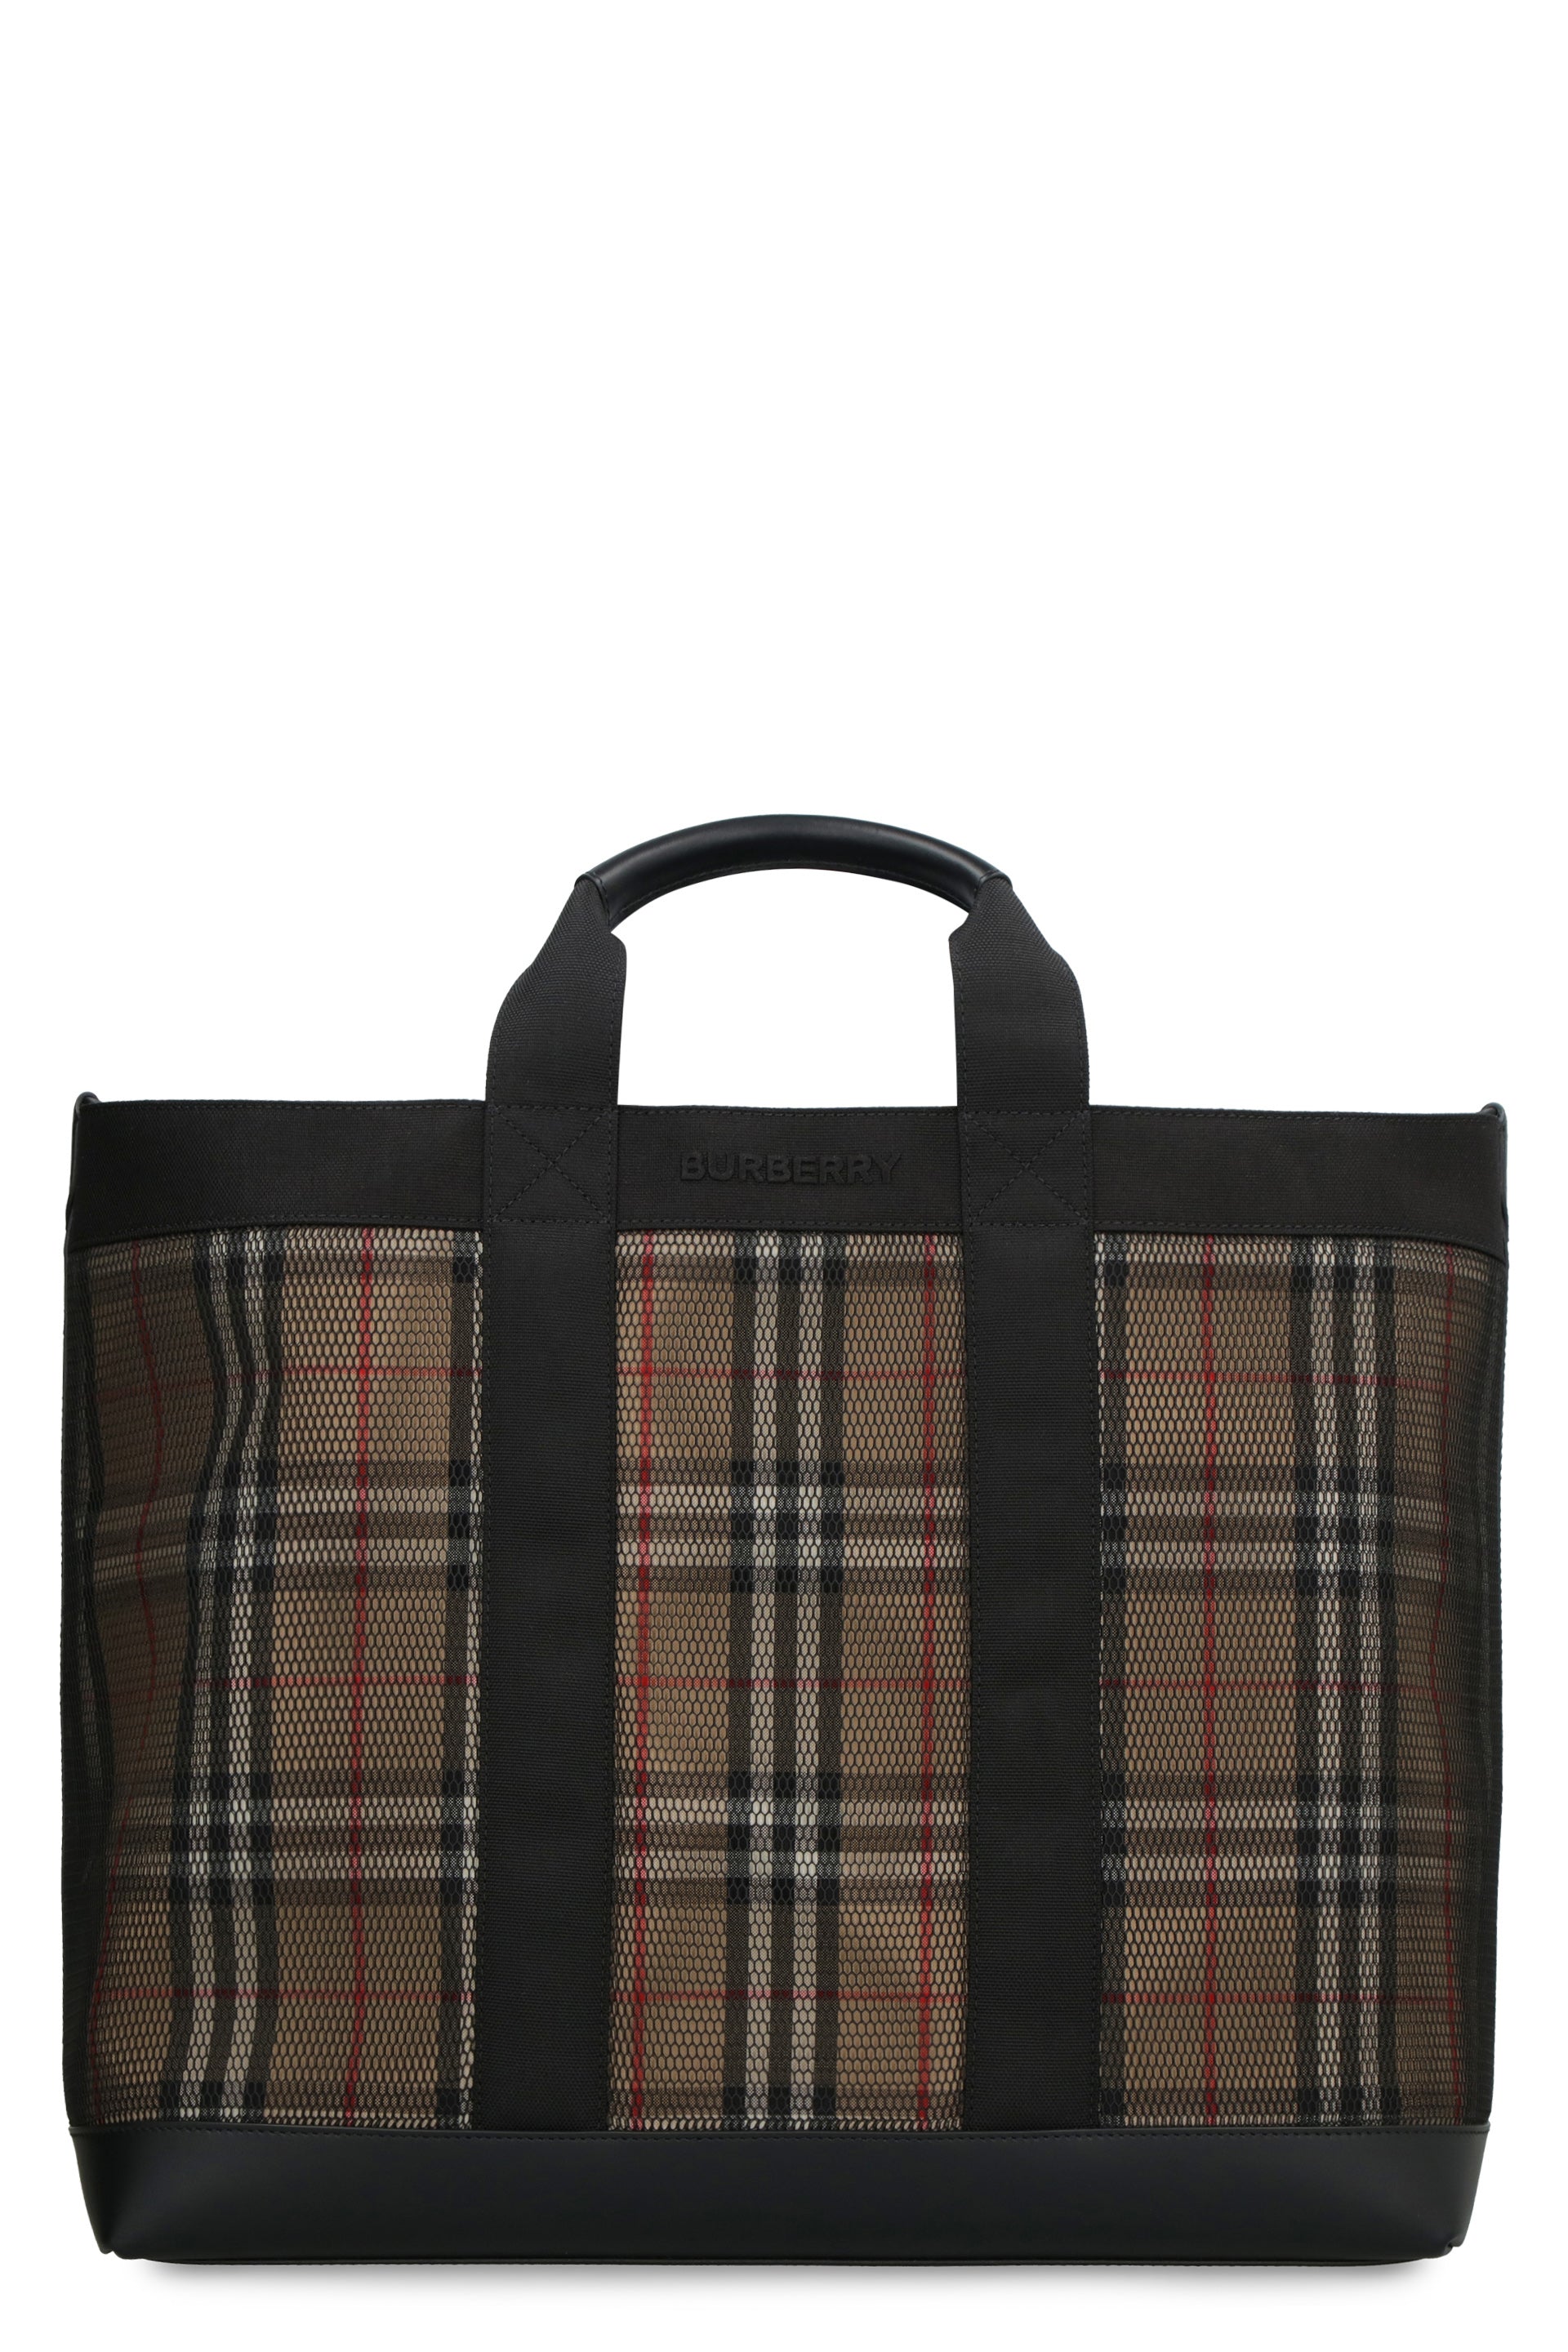 Burberry Vintage Check Print Tote Handbag For Men In Black